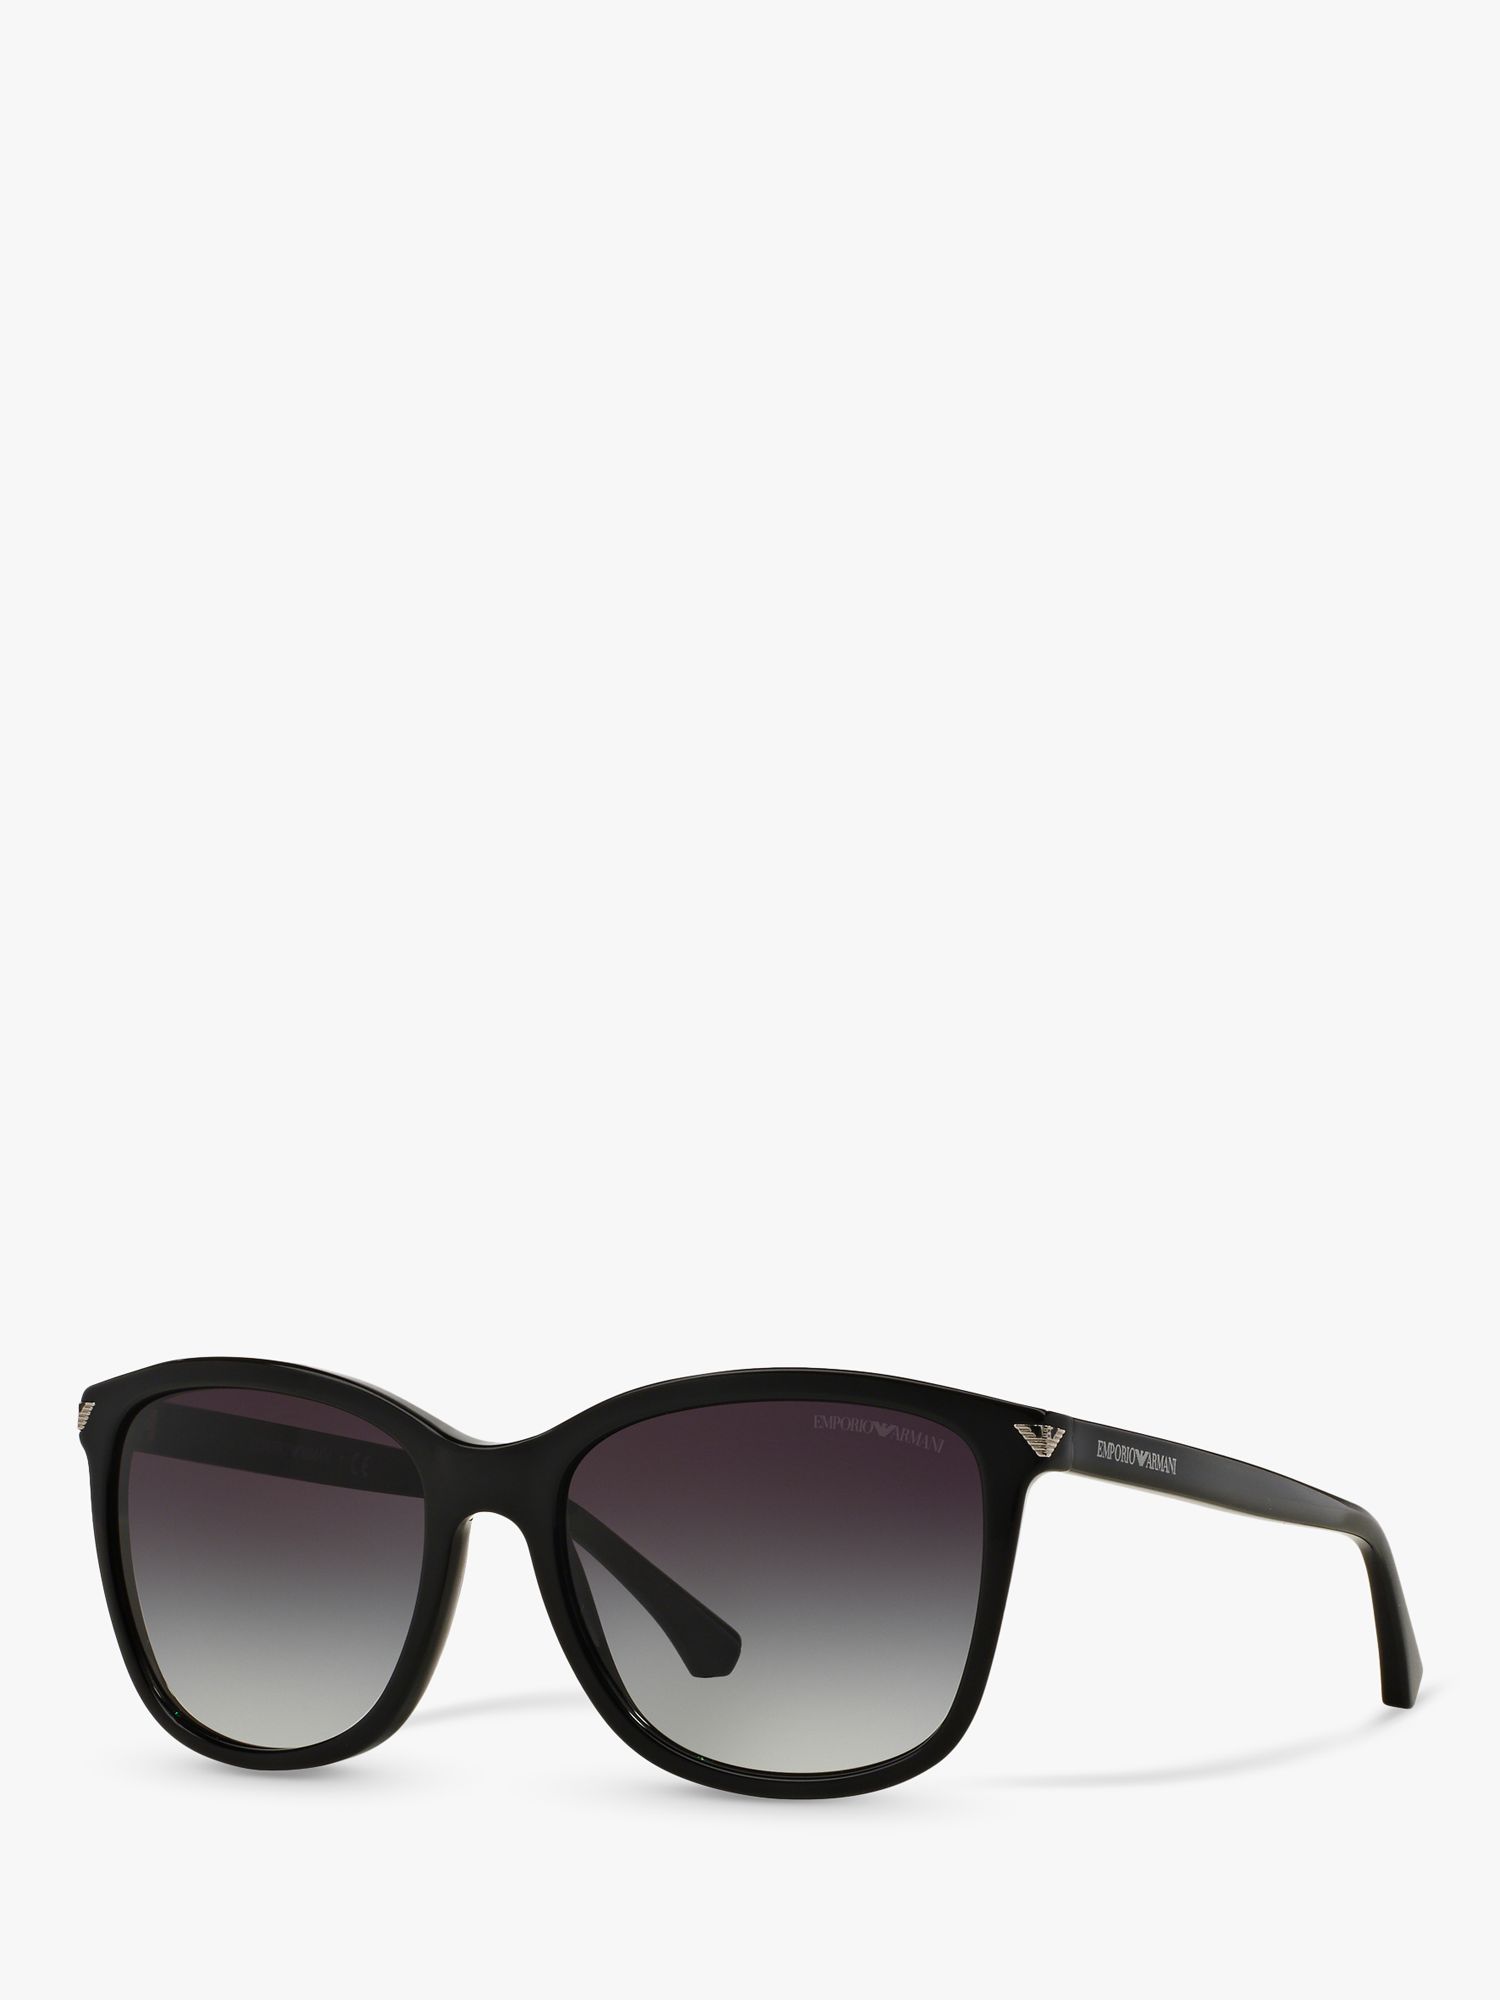 Giorgio Armani Sunglasses Ladies Cheapest Sale, Save 65% 